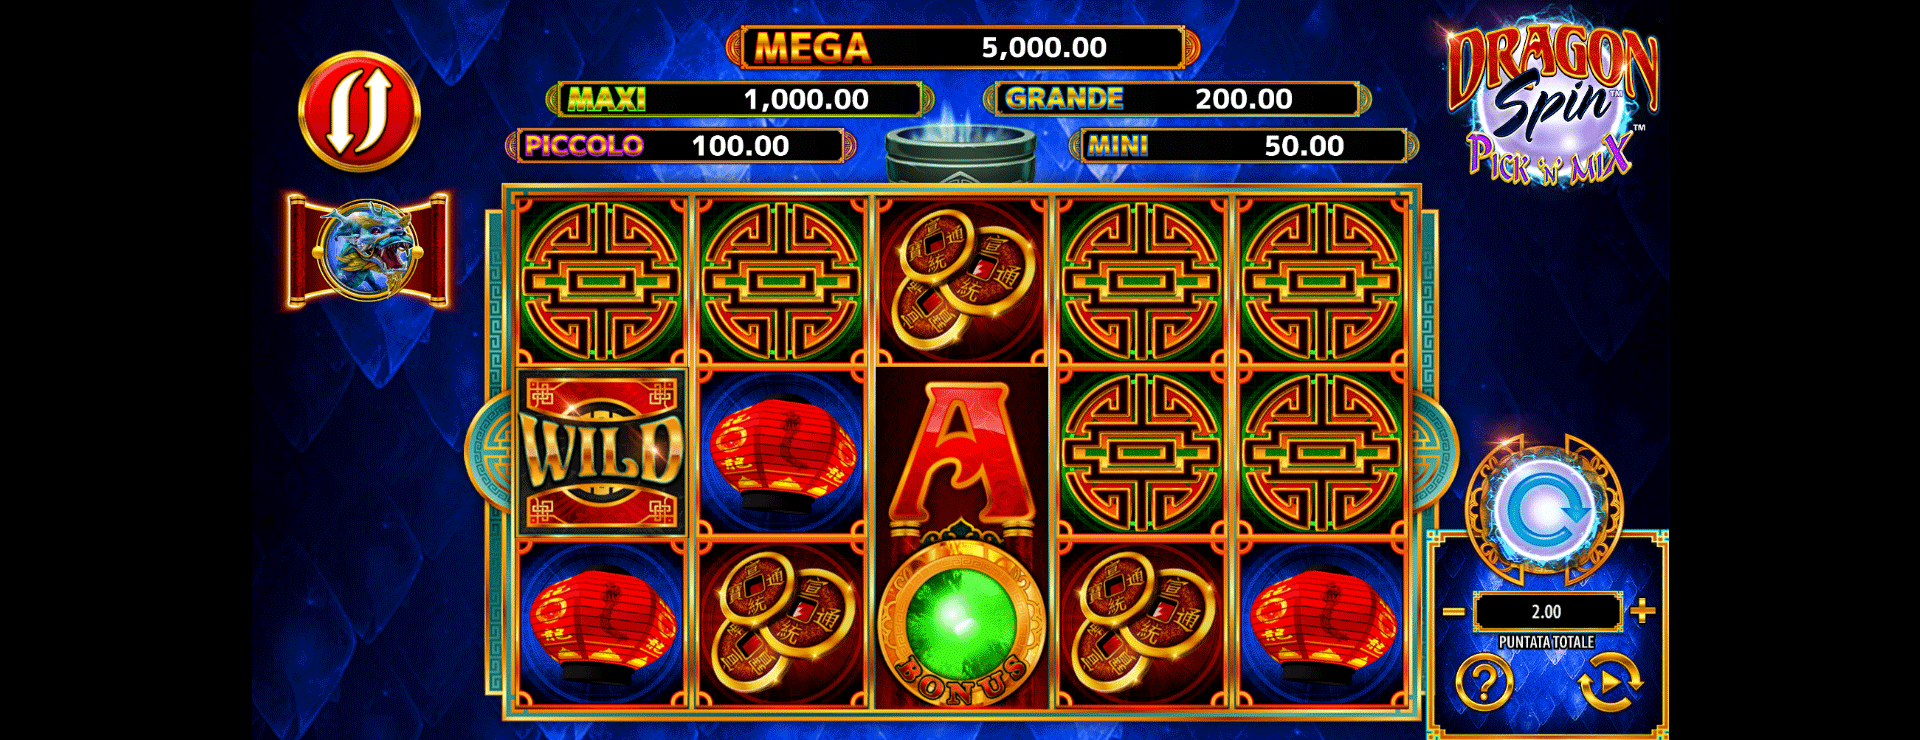 schermata della slot machine dragon spin pick n mix